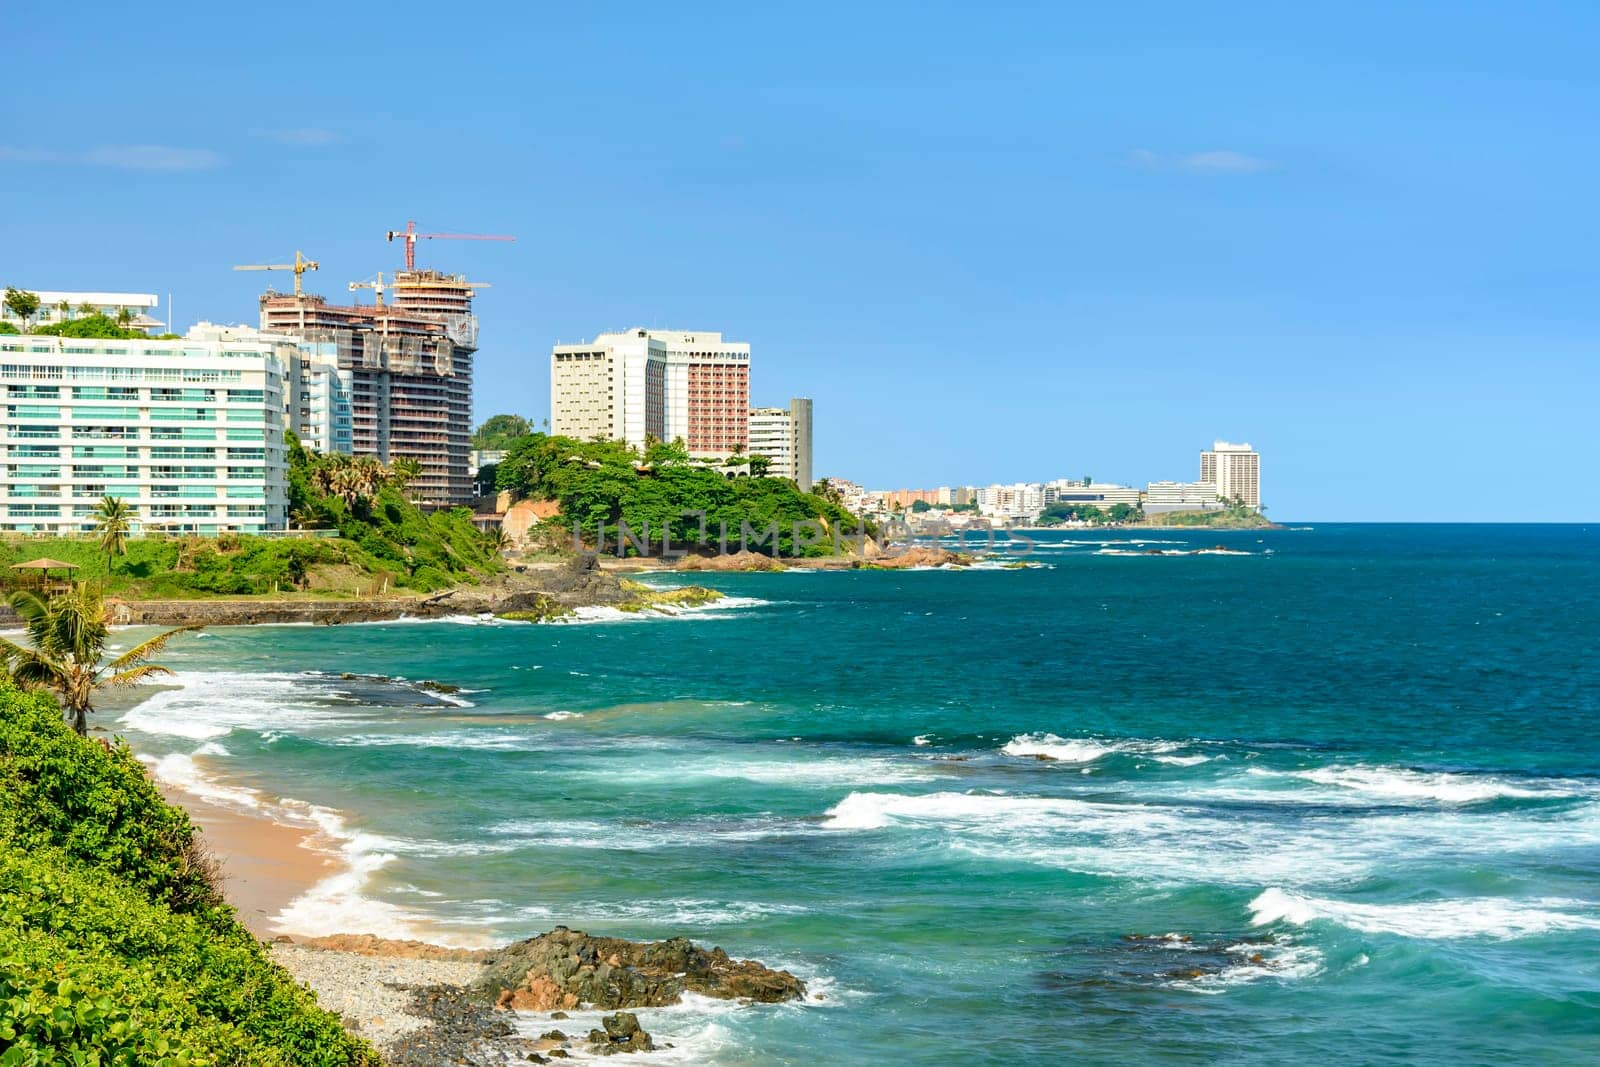 Paridisiac tropical beach in the urban area of Salvador by Fred_Pinheiro